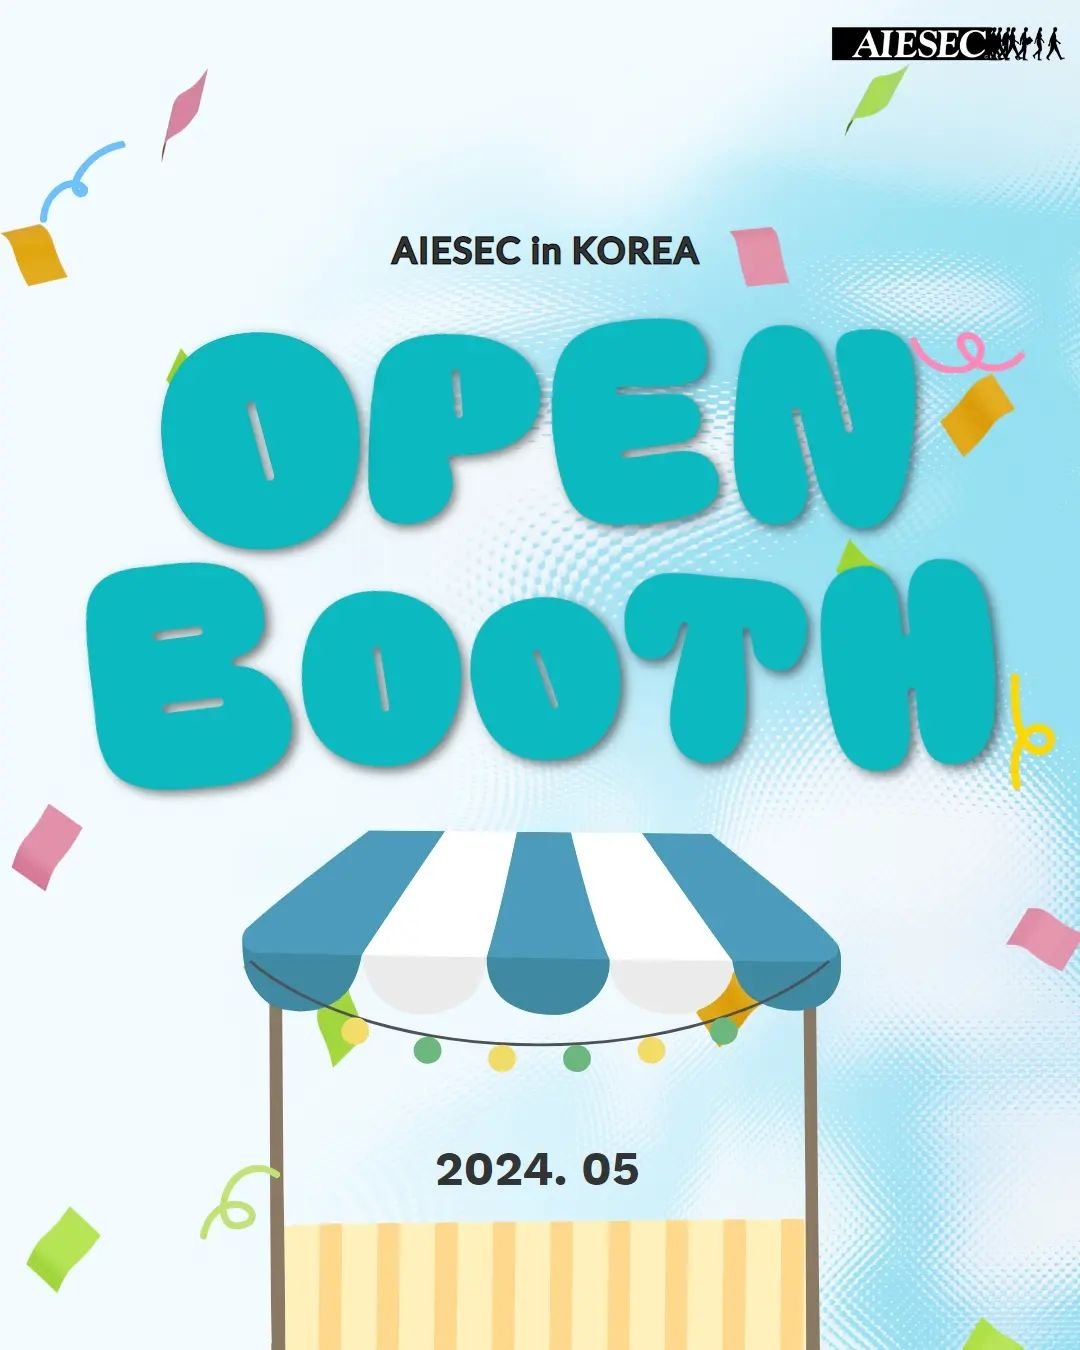 Stop Thinking, go ahead with AIESEC! 
안녕하세요! AIESEC in KOREA입니다✈️

AIESEC in KOREA는 5월에 Open Booth를 진행할 예정입니다! 

꽉 찬 캘린더 보이시나요⁉️ 
한 달 동안 재밌고 유익한 부스가 준비되어 있습니다 🤭🤭

14개 지부의 Open Booth 일정들 확인한 다음, 잊지 말고 꼭 참여해 보세요 🩵😄

Open Booth에 대한 많은 기대와 관심 부탁드립니다?